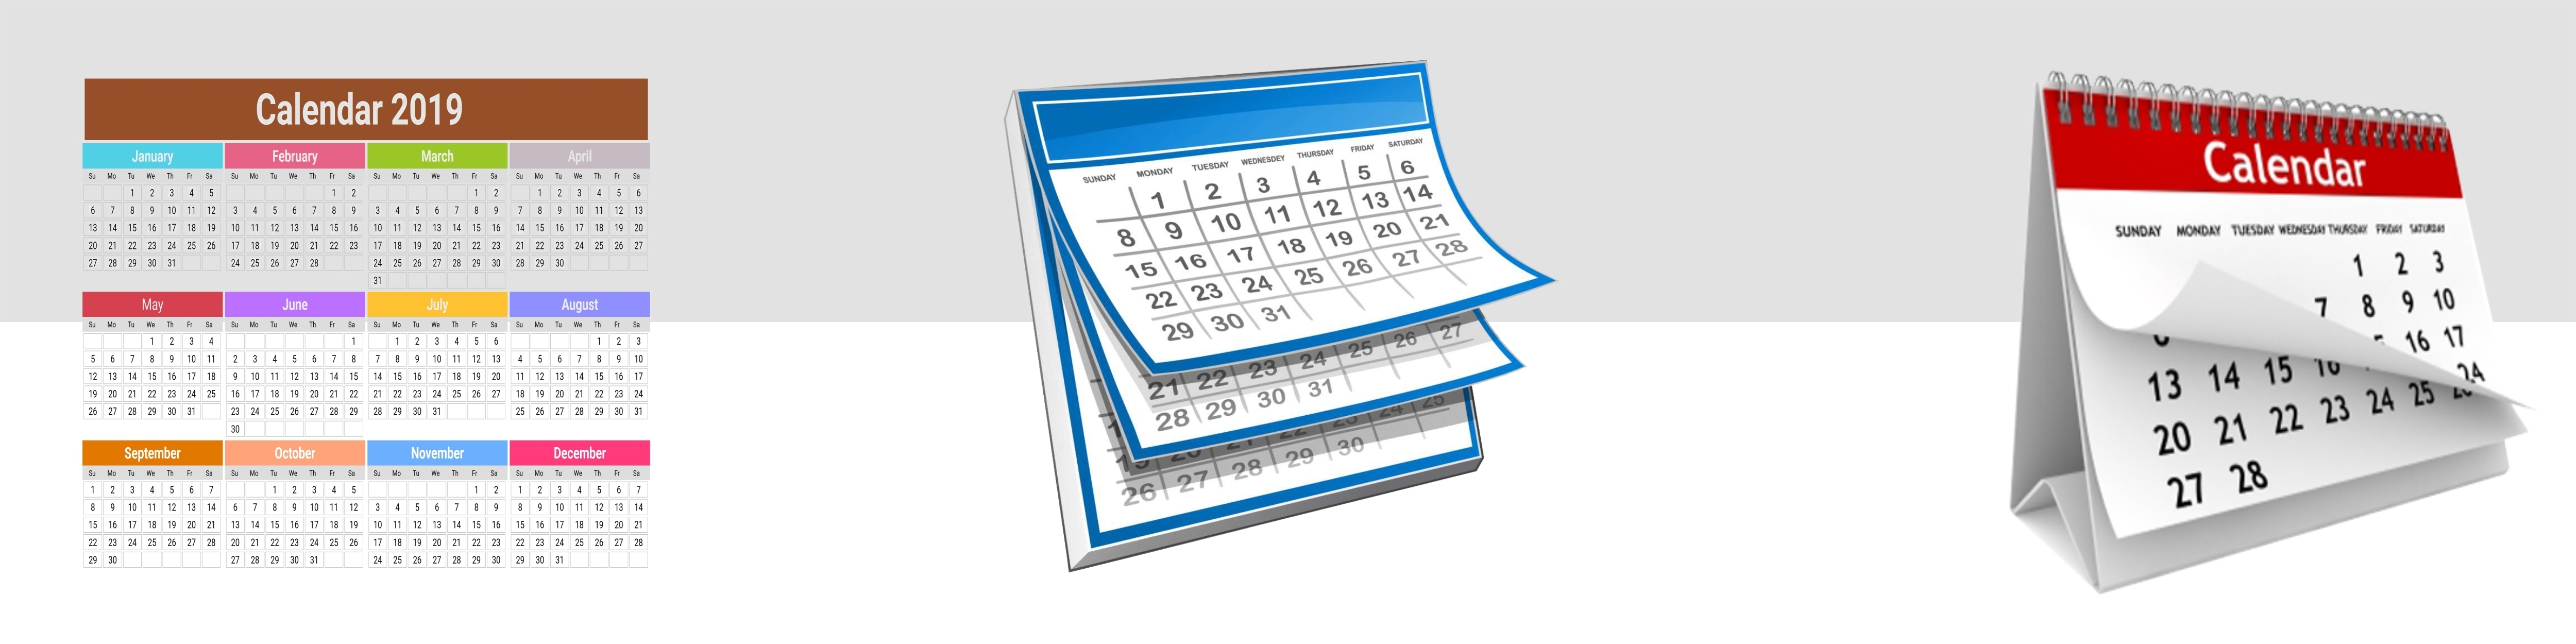 Calendars Printing In Chittoor, Wall Calendars Printing In Chittoor Cost Of Calendar Printing India